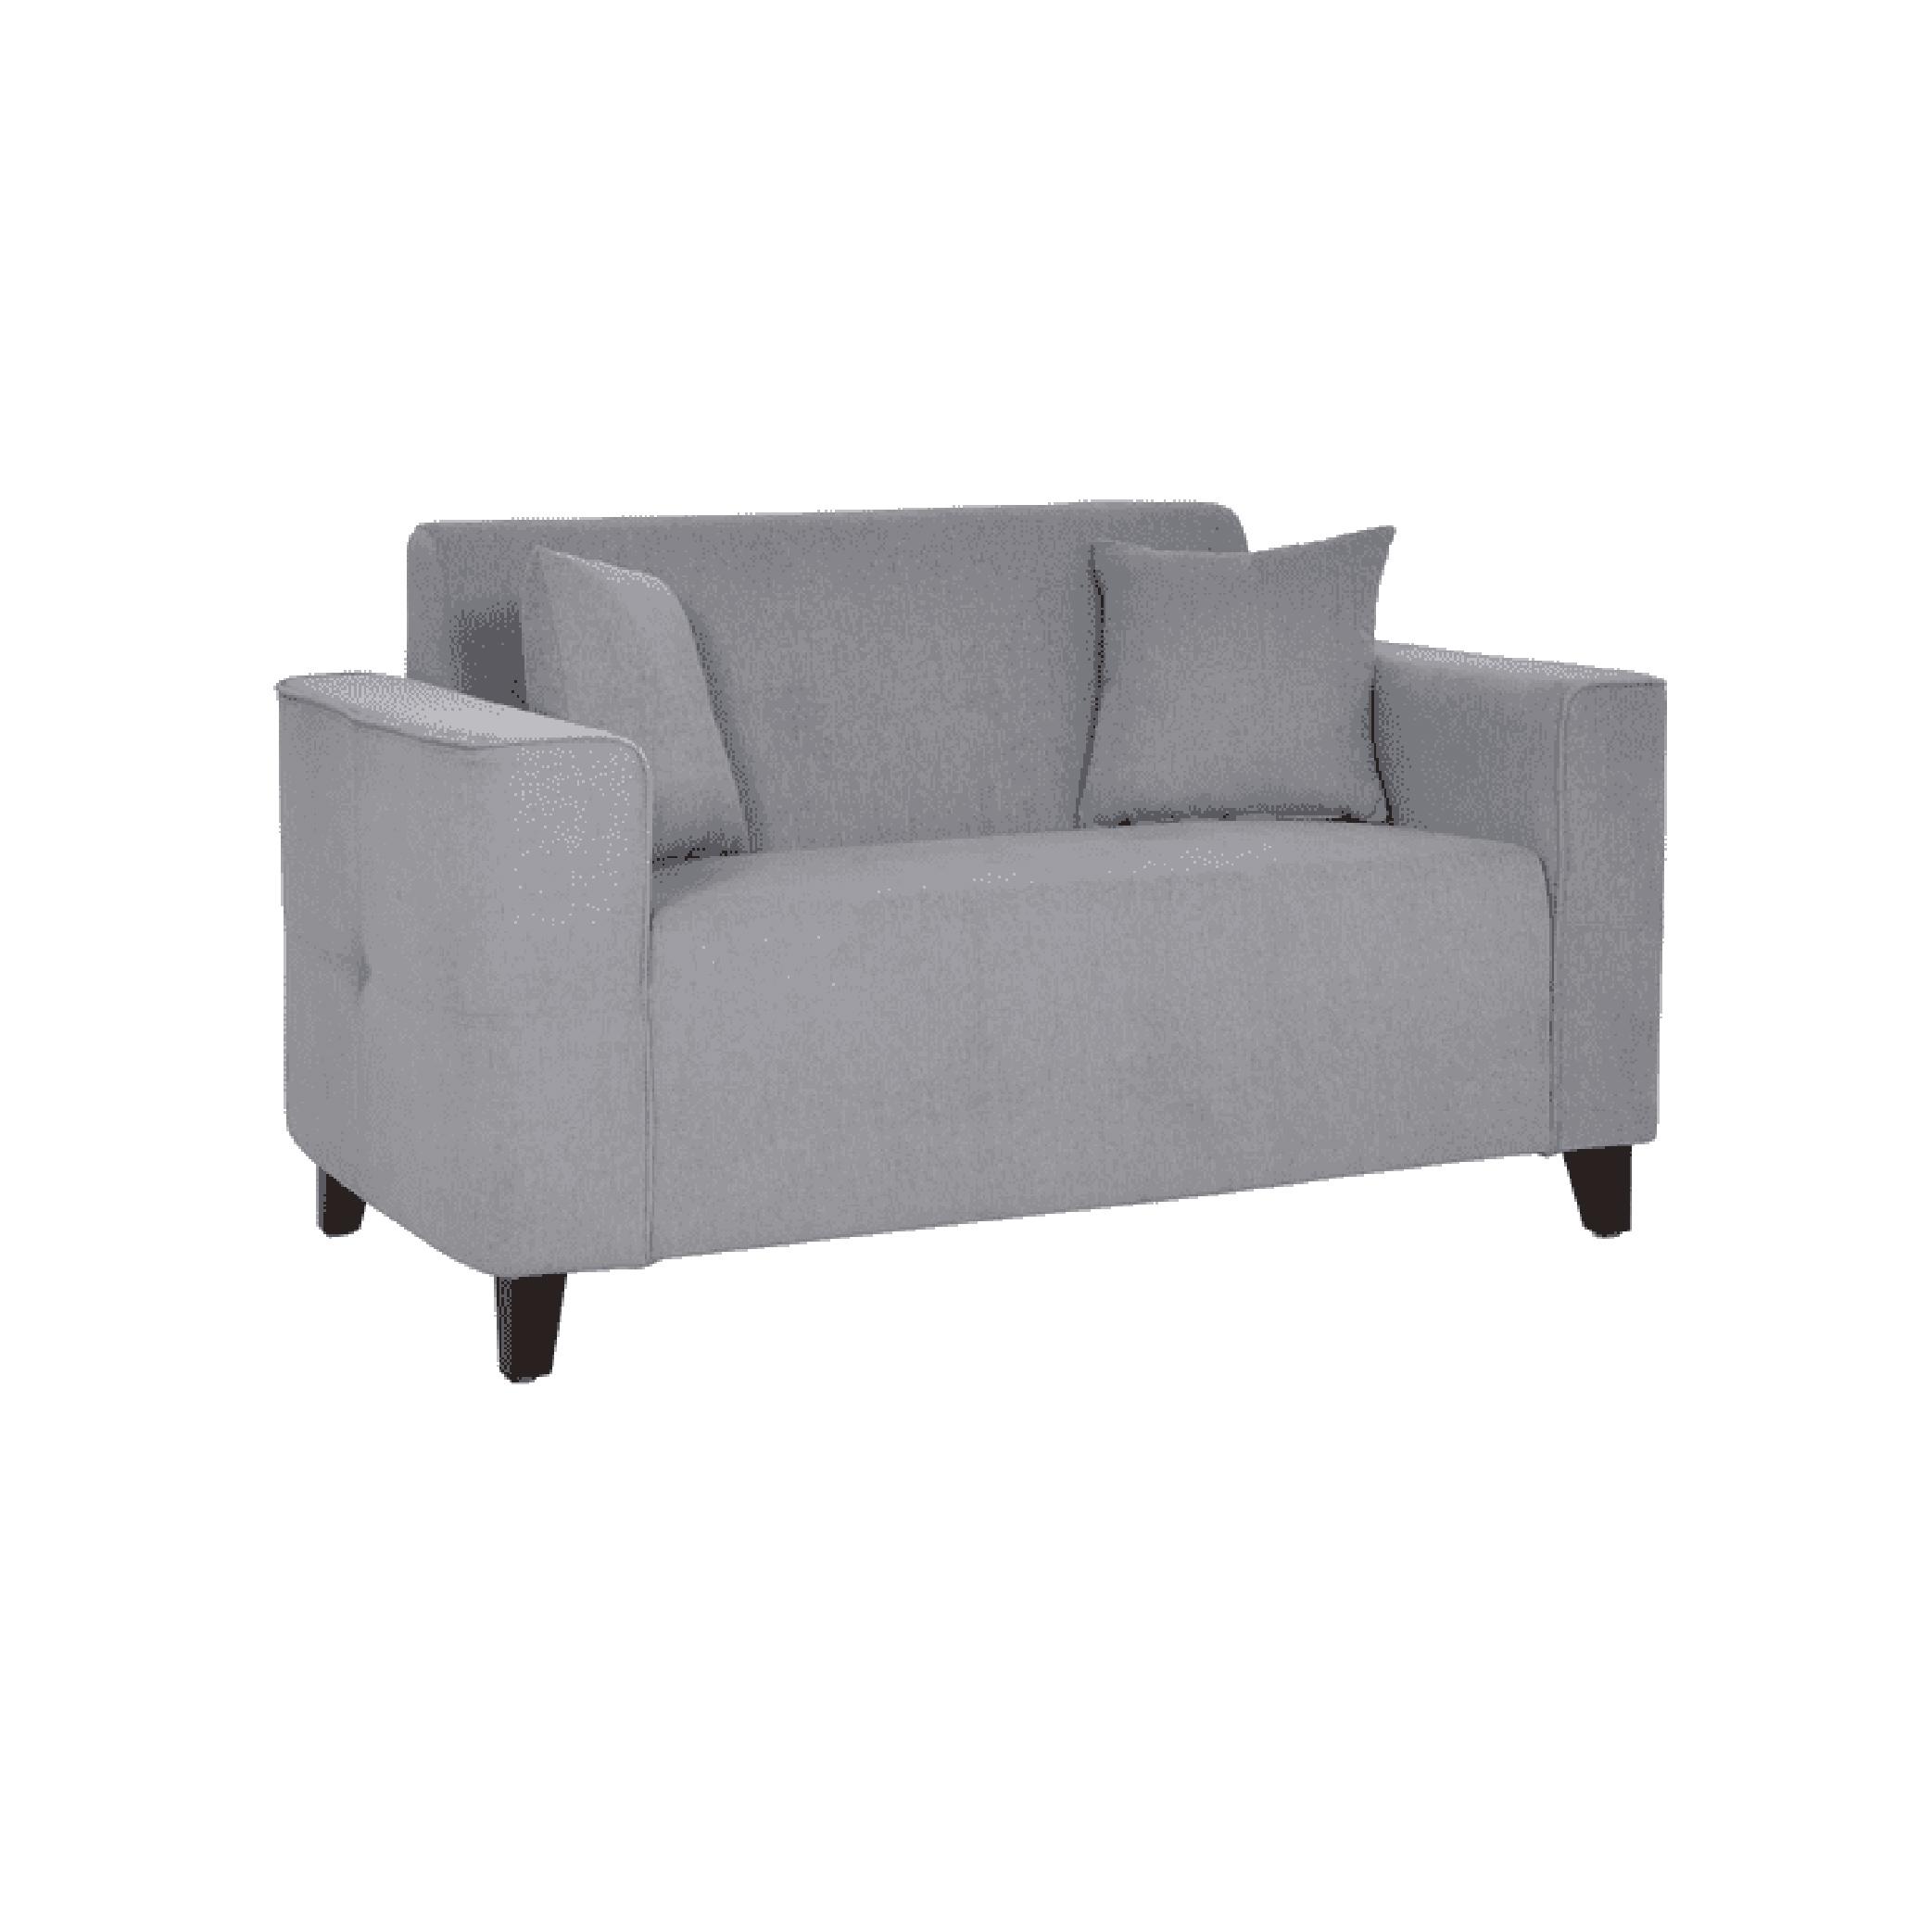 Faenza Two Seater Sofa in Ash Grey Colour